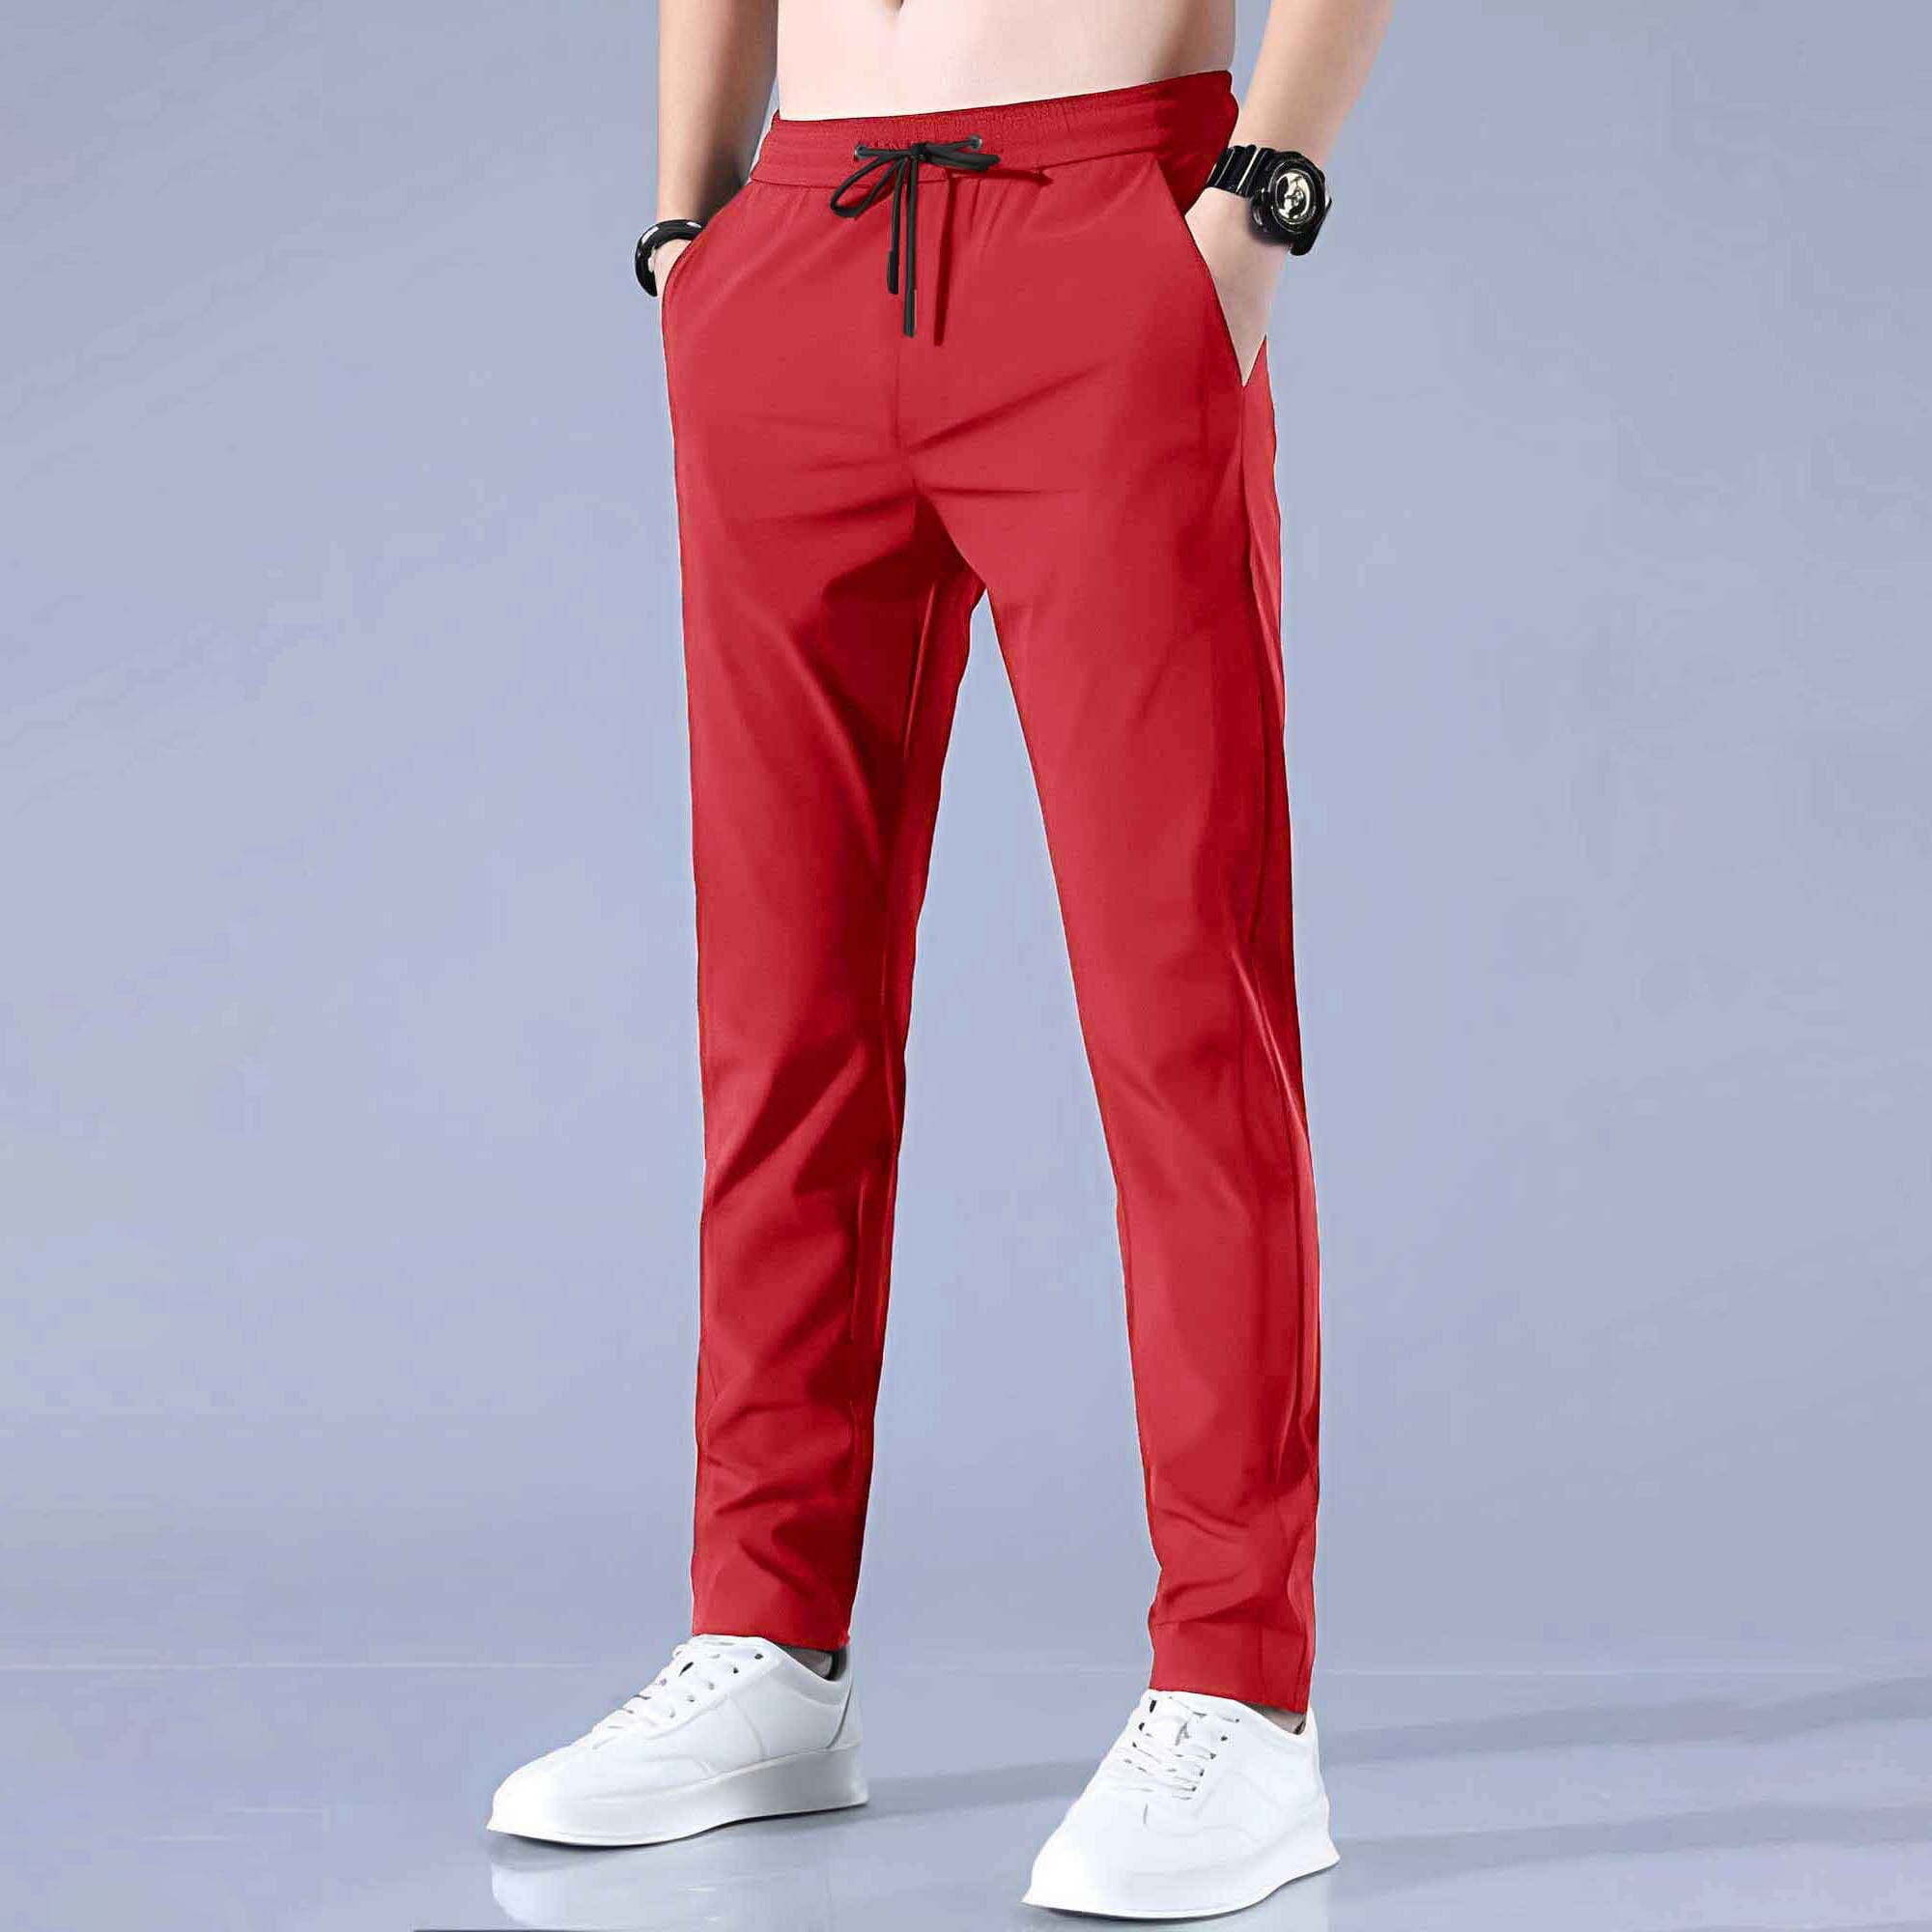 U.S. Polo Assn. Mens Pants in Mens Clothing - Walmart.com